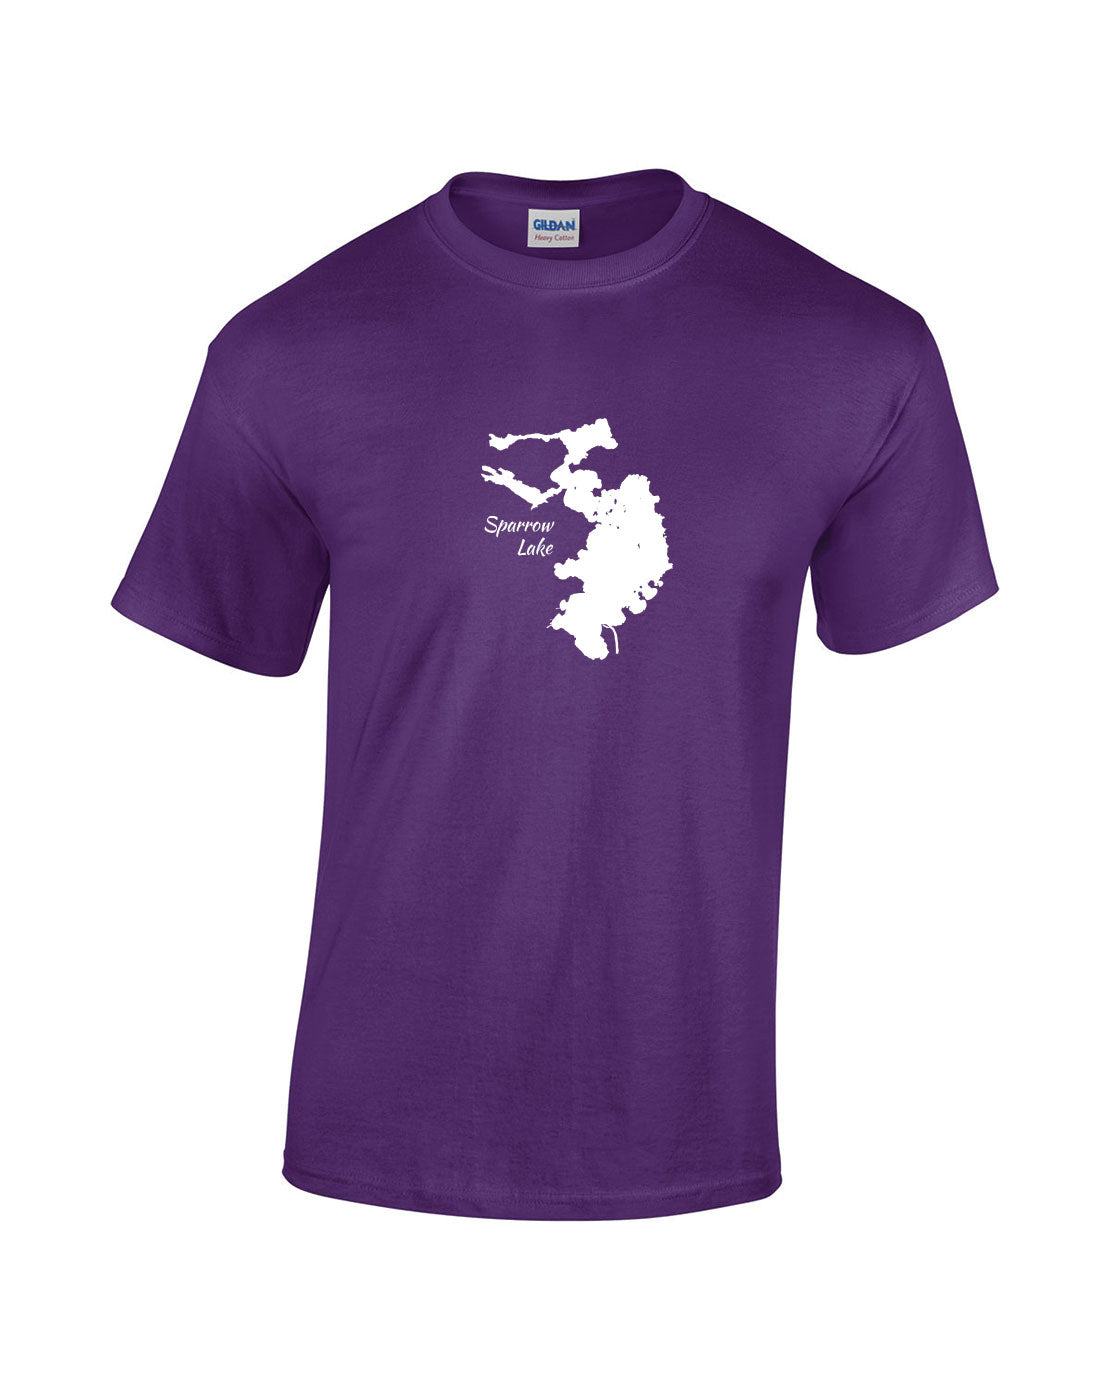 Sparrow Lake T-Shirt